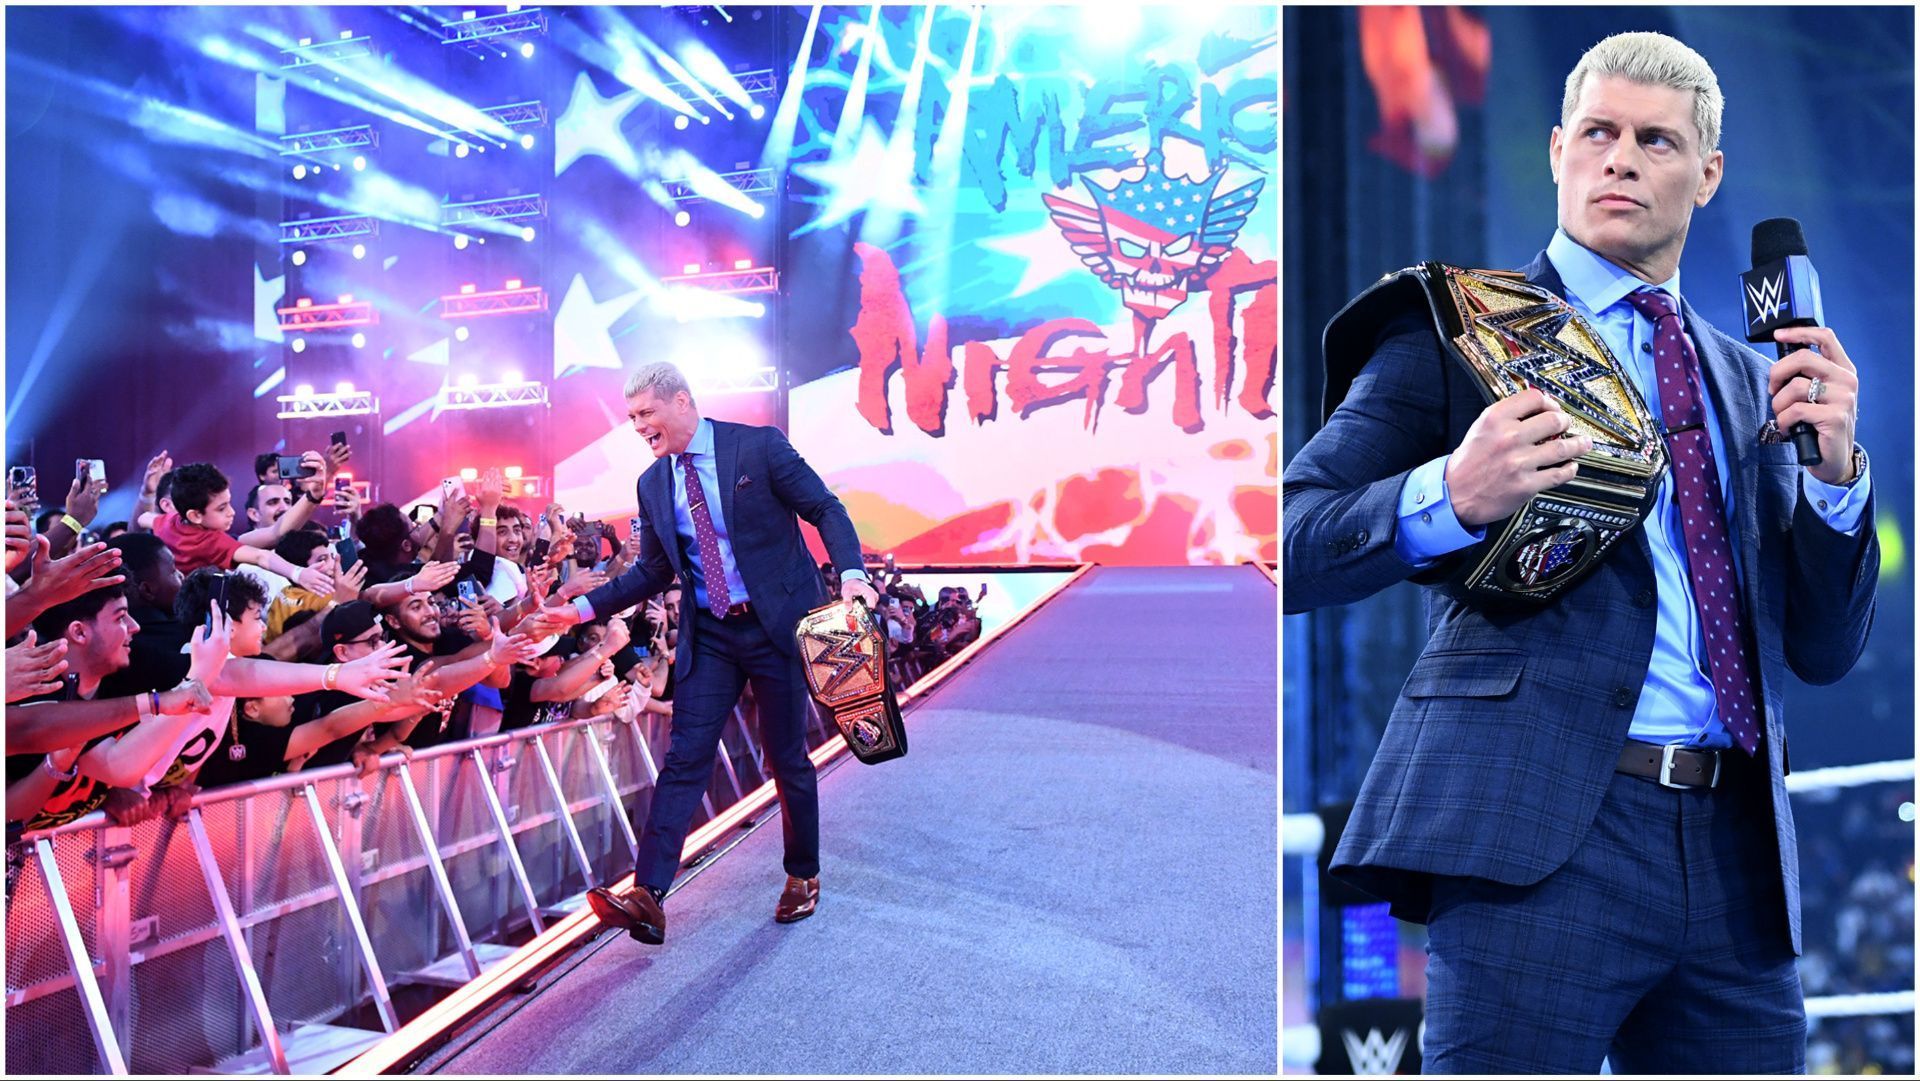 Cody Rhodes on WWE SmackDown in Saudi Arabia